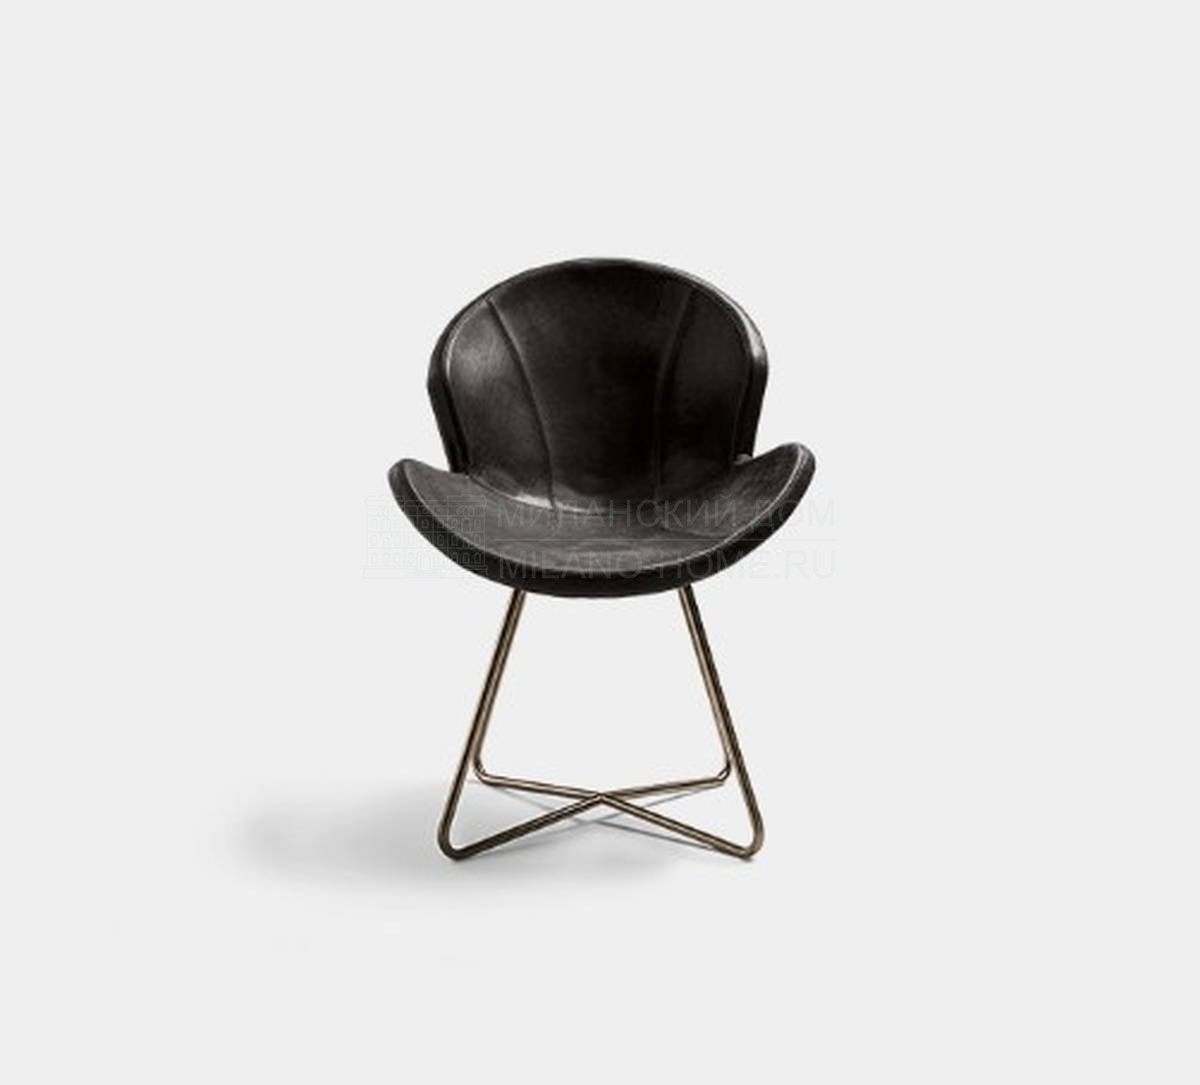 Кожаный стул Victoria chair из Италии фабрики ARKETIPO